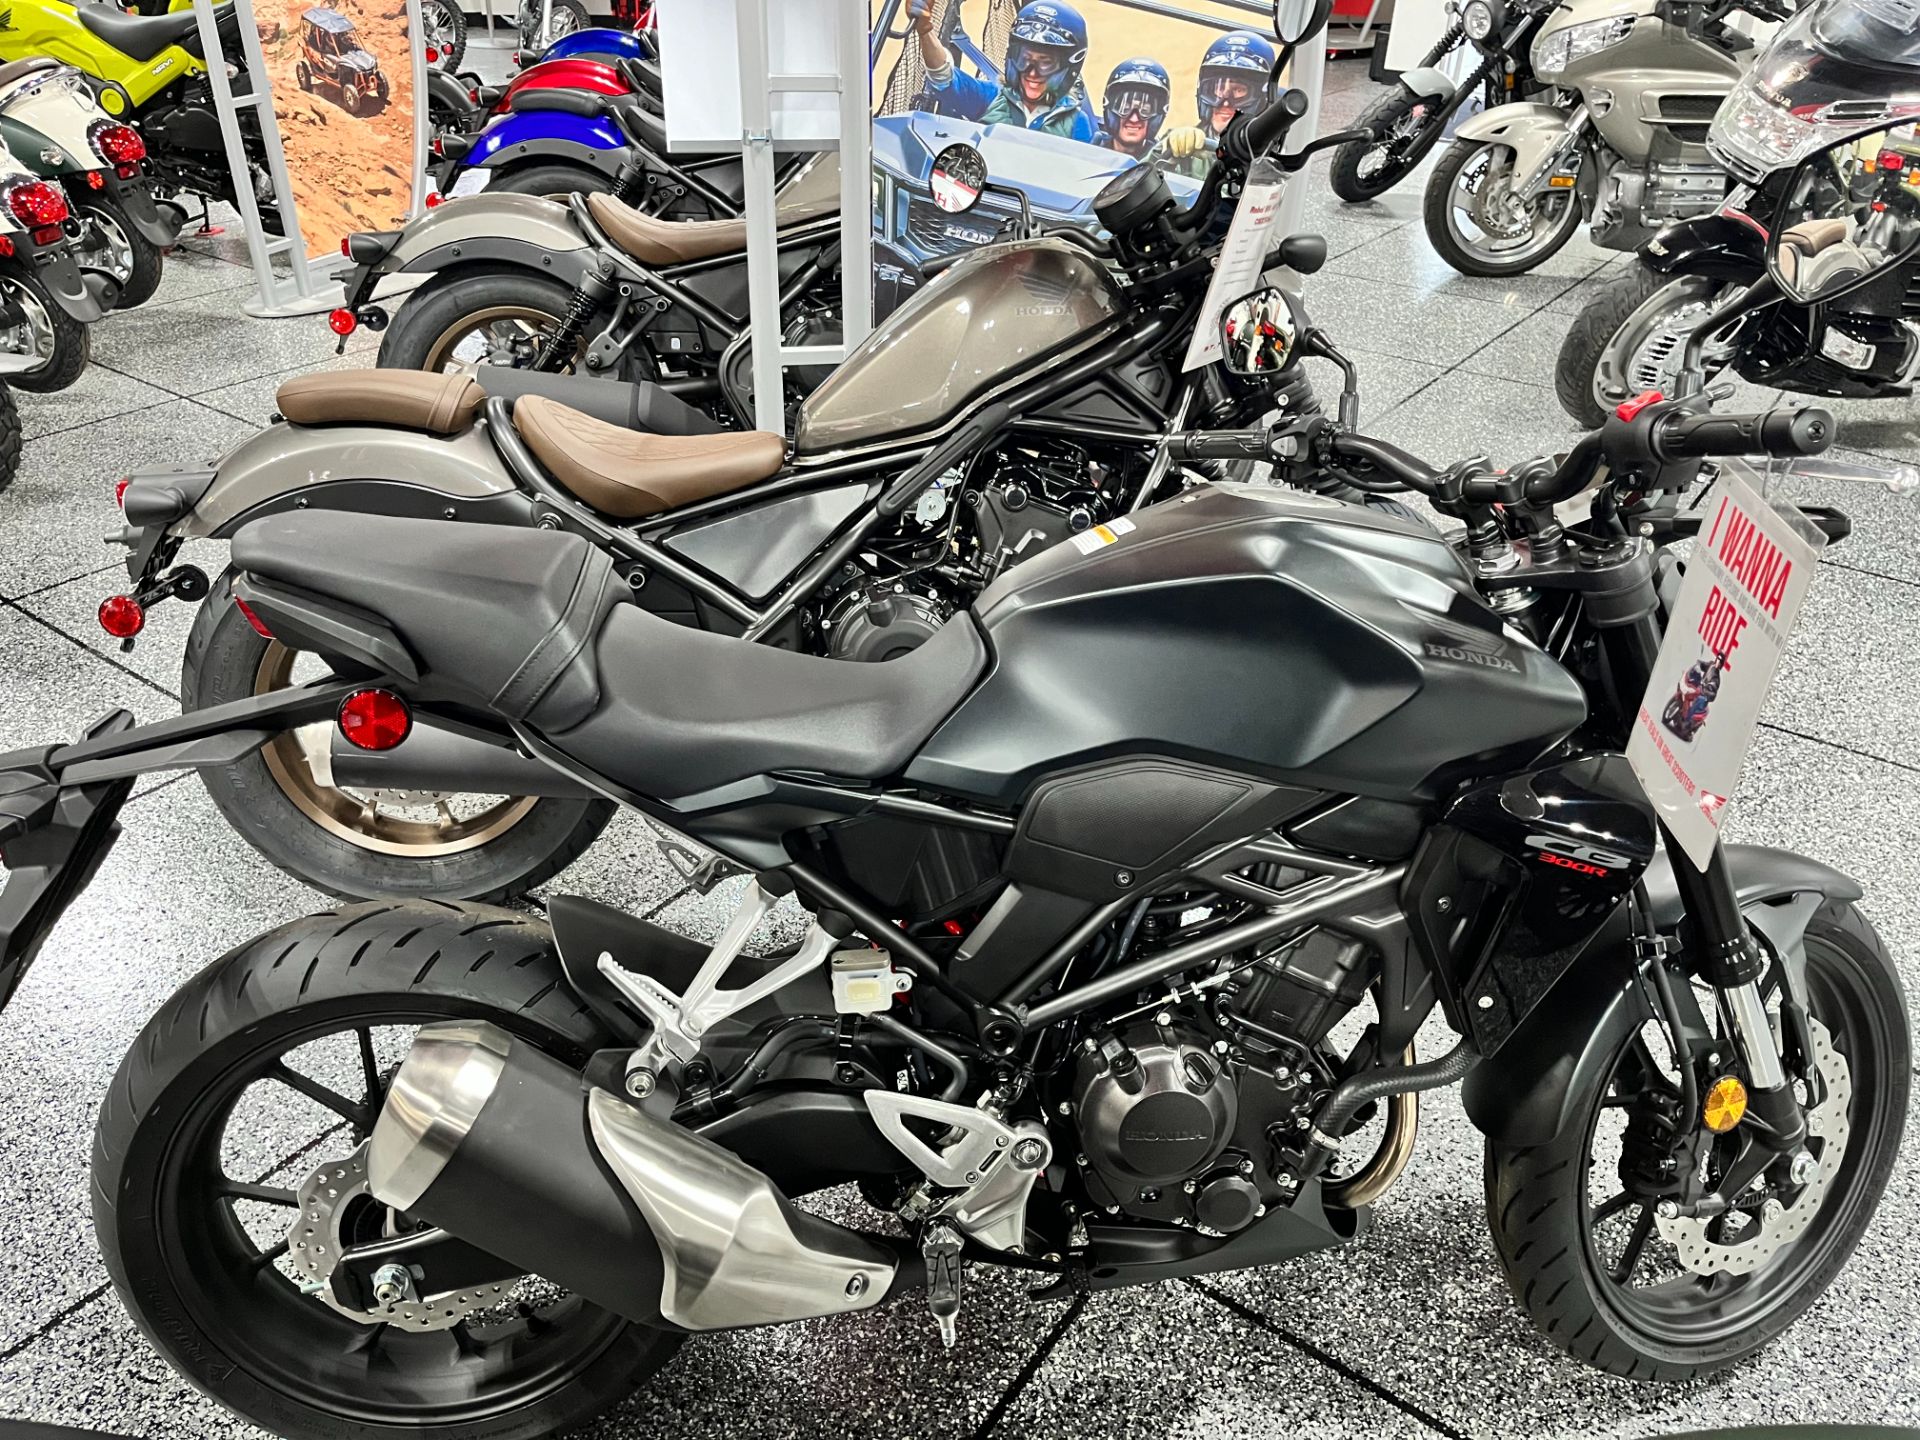 2024 Honda CB300R ABS in Ottawa, Ohio - Photo 1